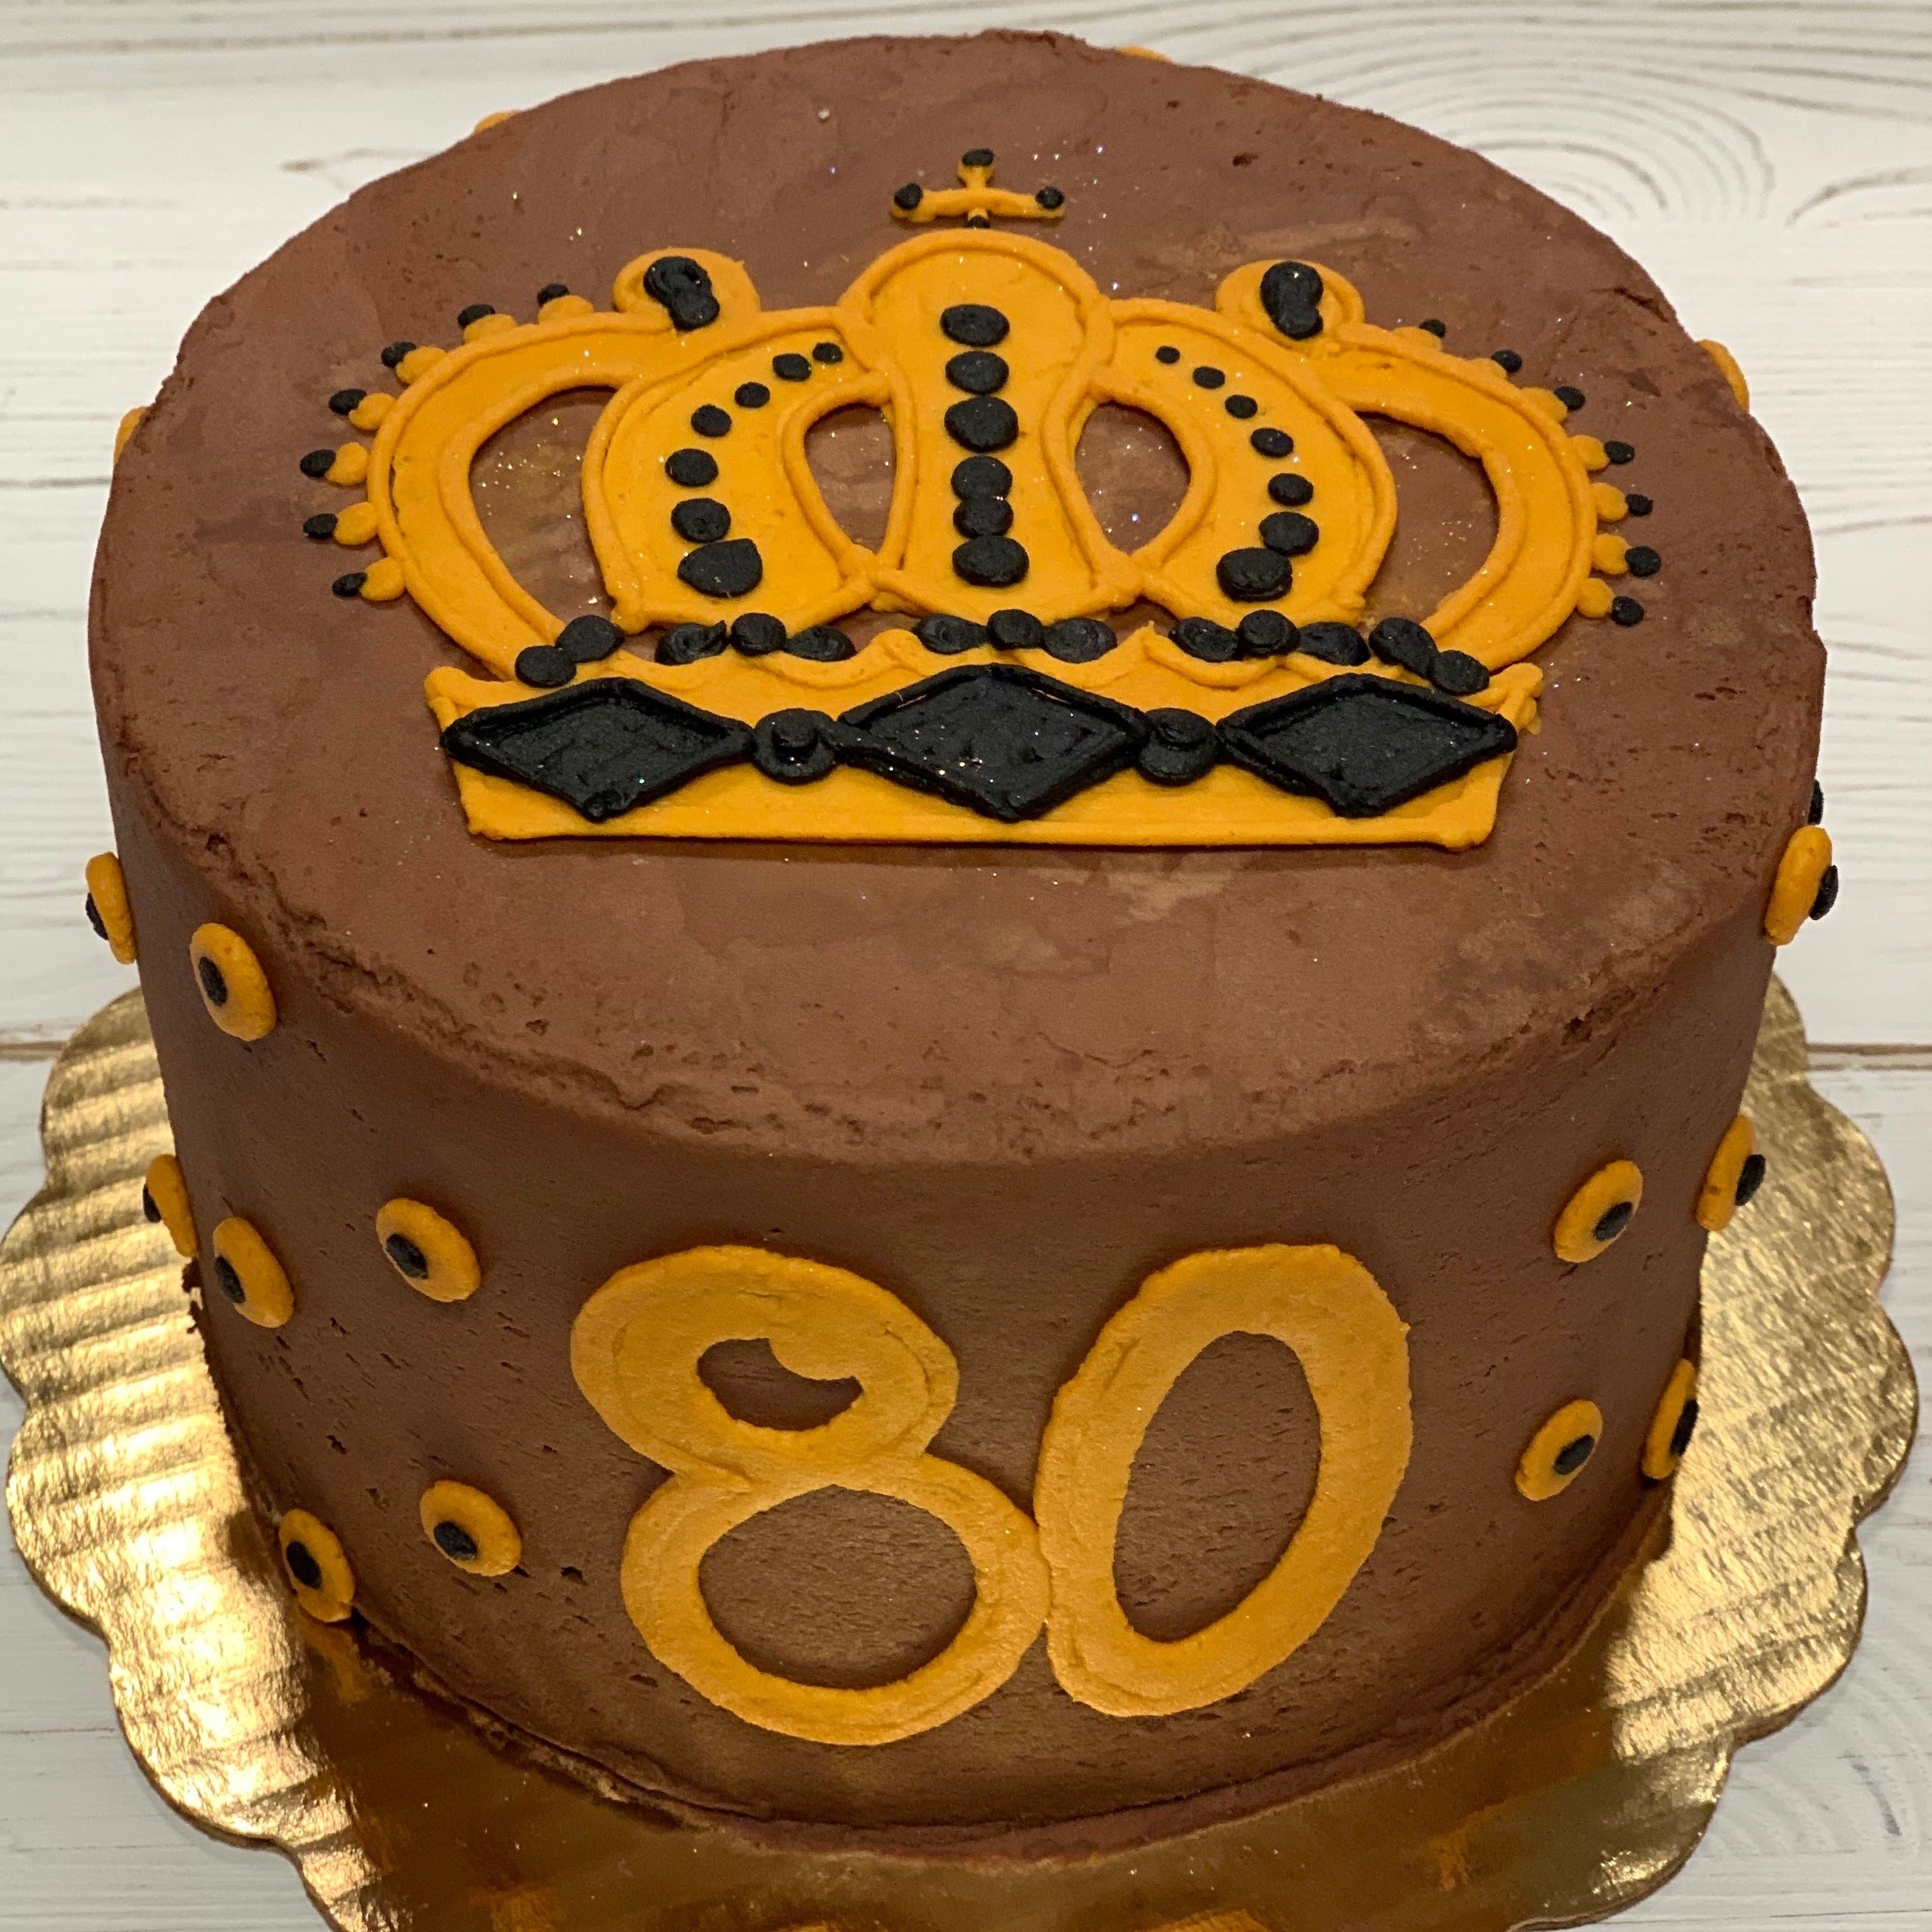 King cake - Wikipedia